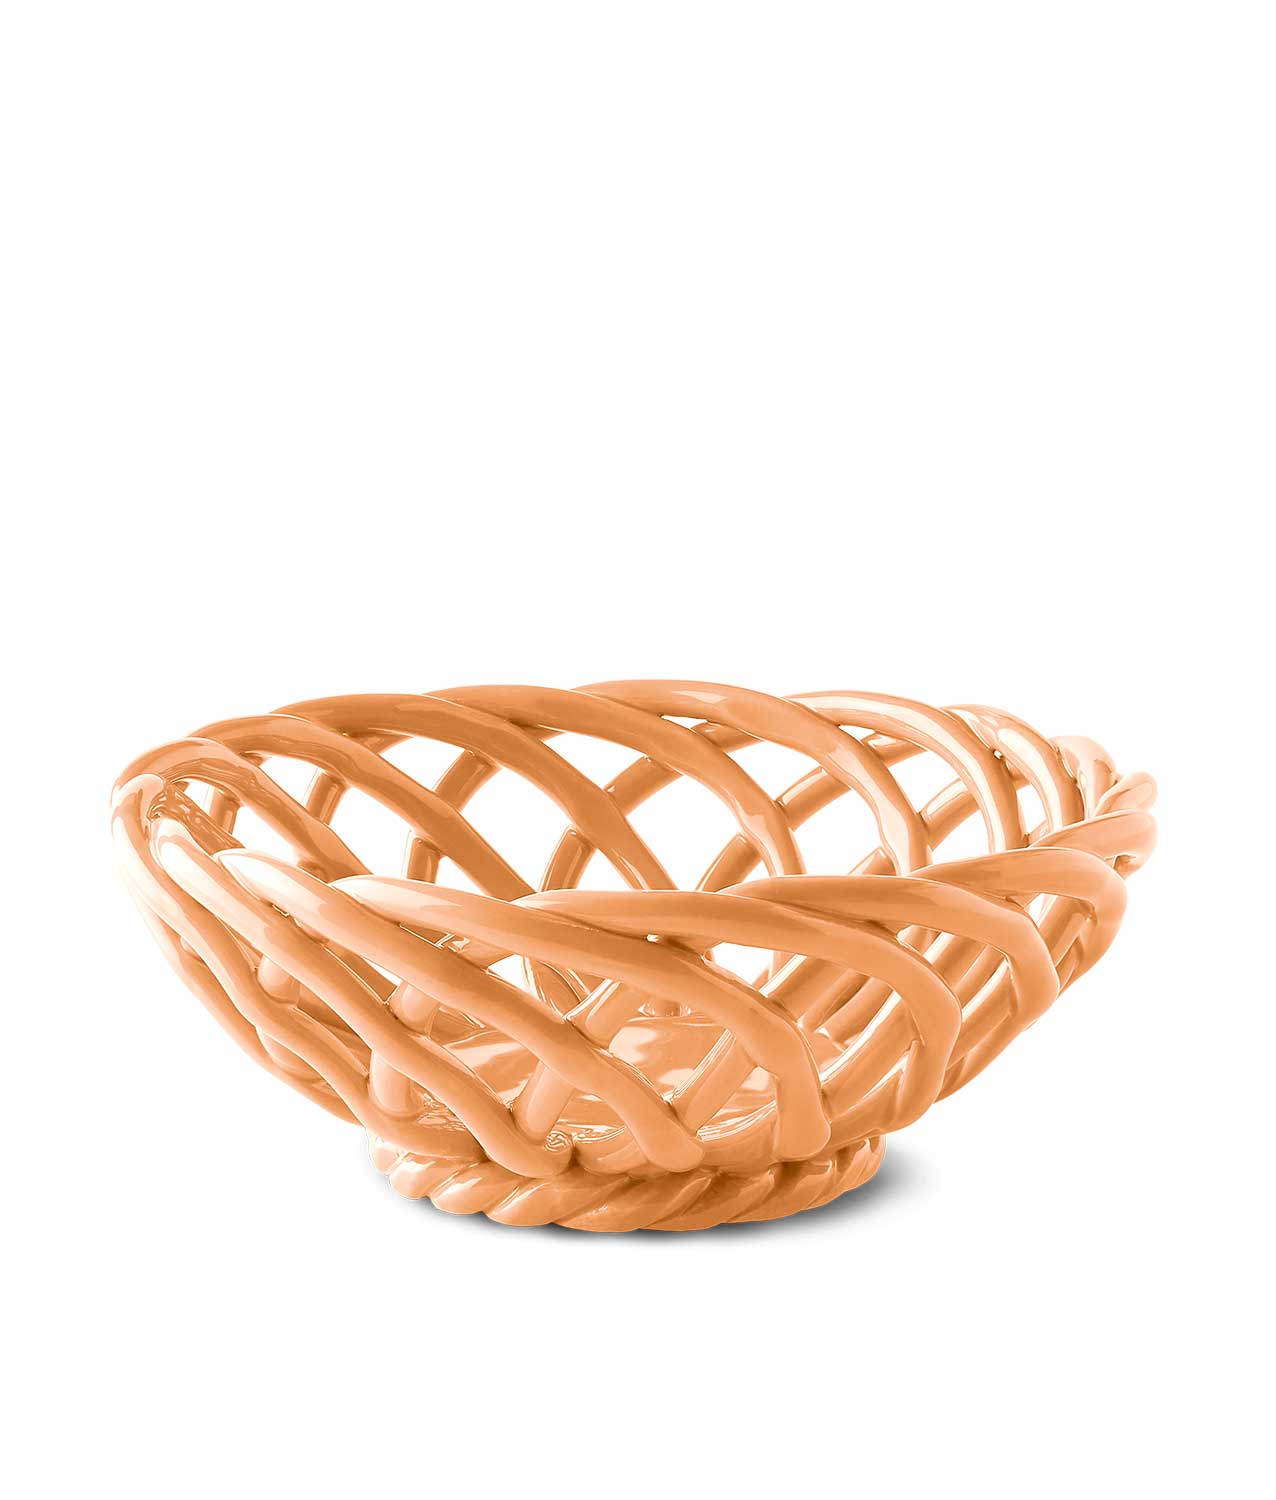 Octaevo Sicilia Small Basket Ceramic - Tangerine